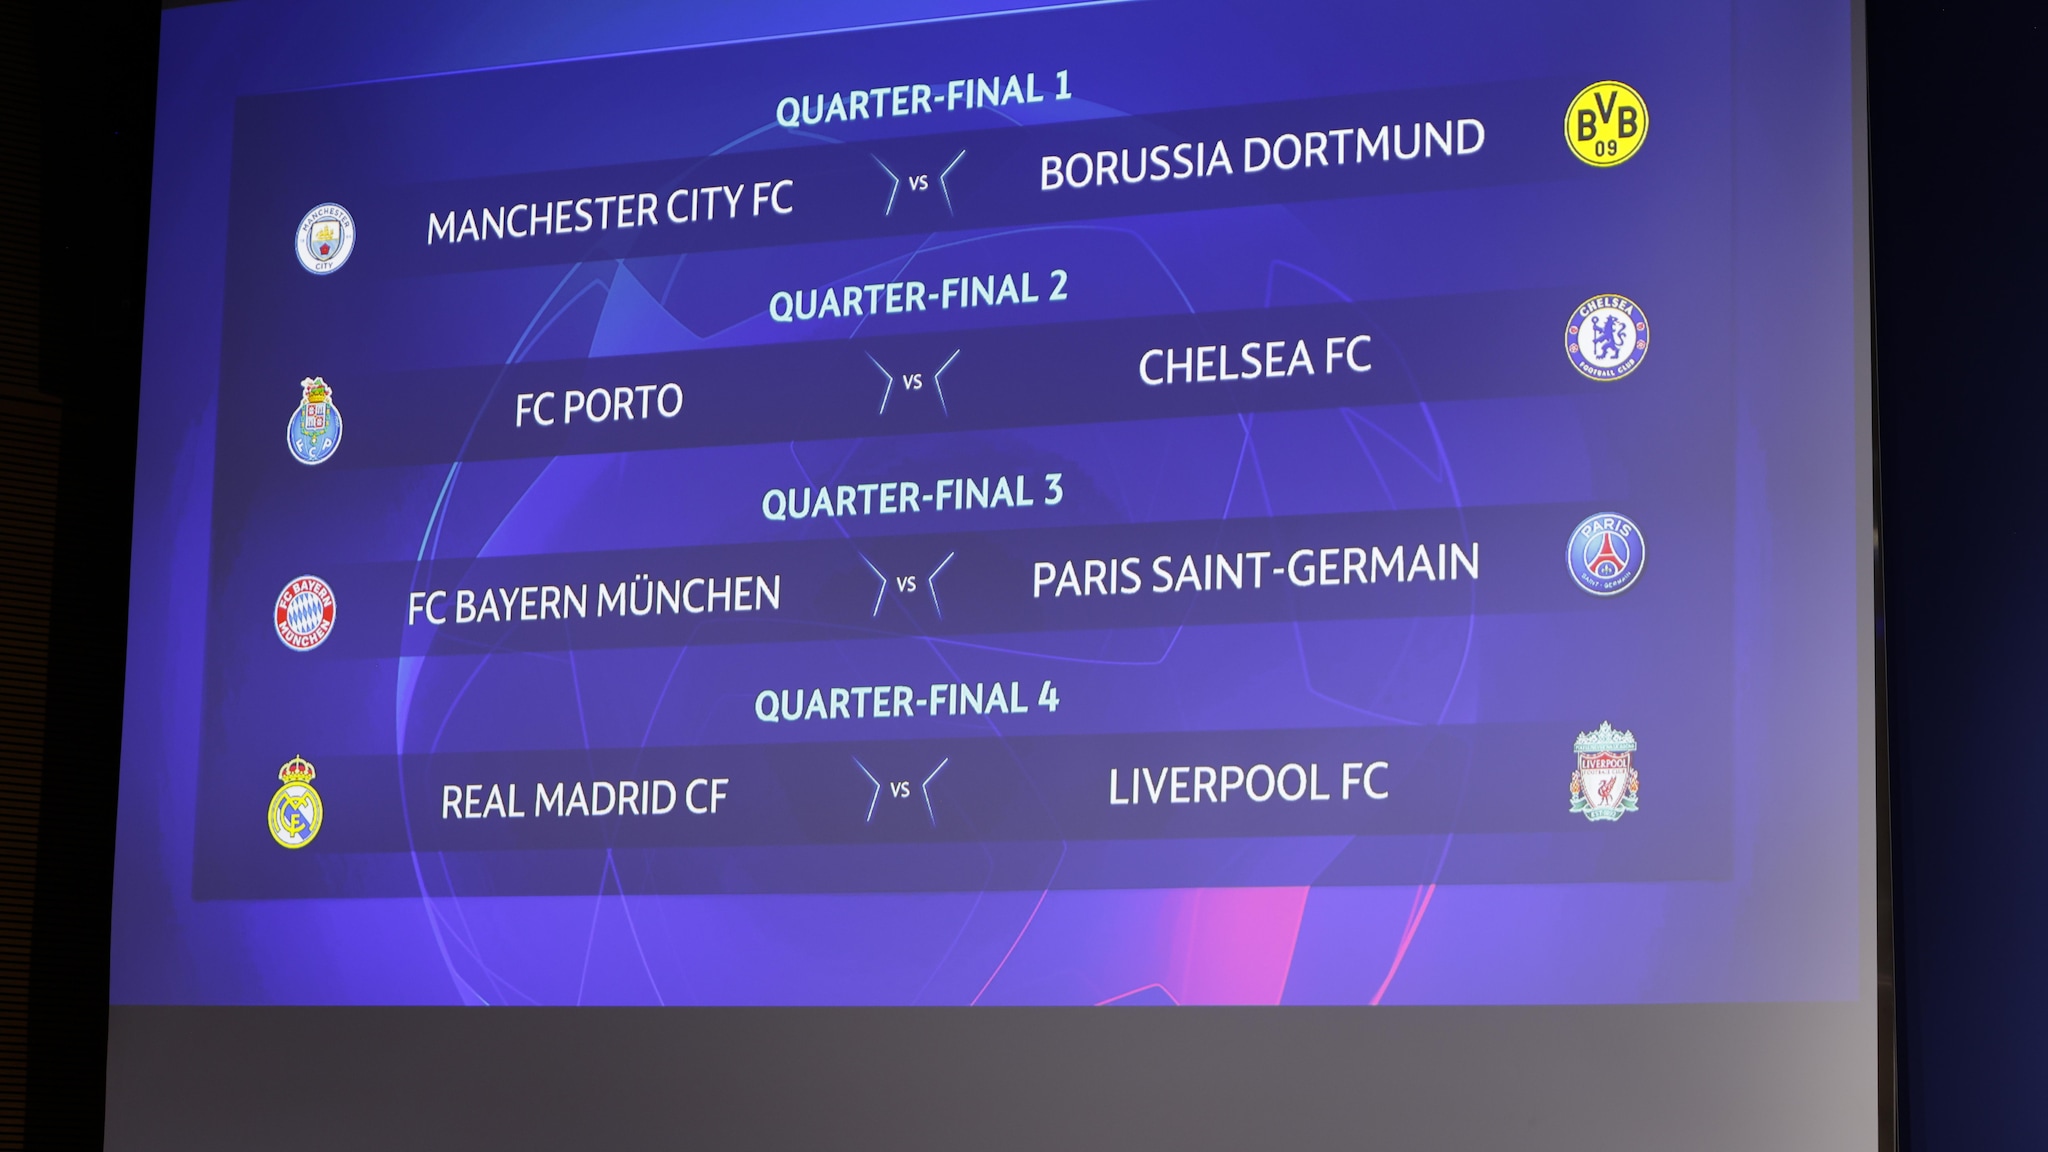 Champions League quarter-final draw: Bayern vs Paris rematch | UEFA Champions League | UEFA.com